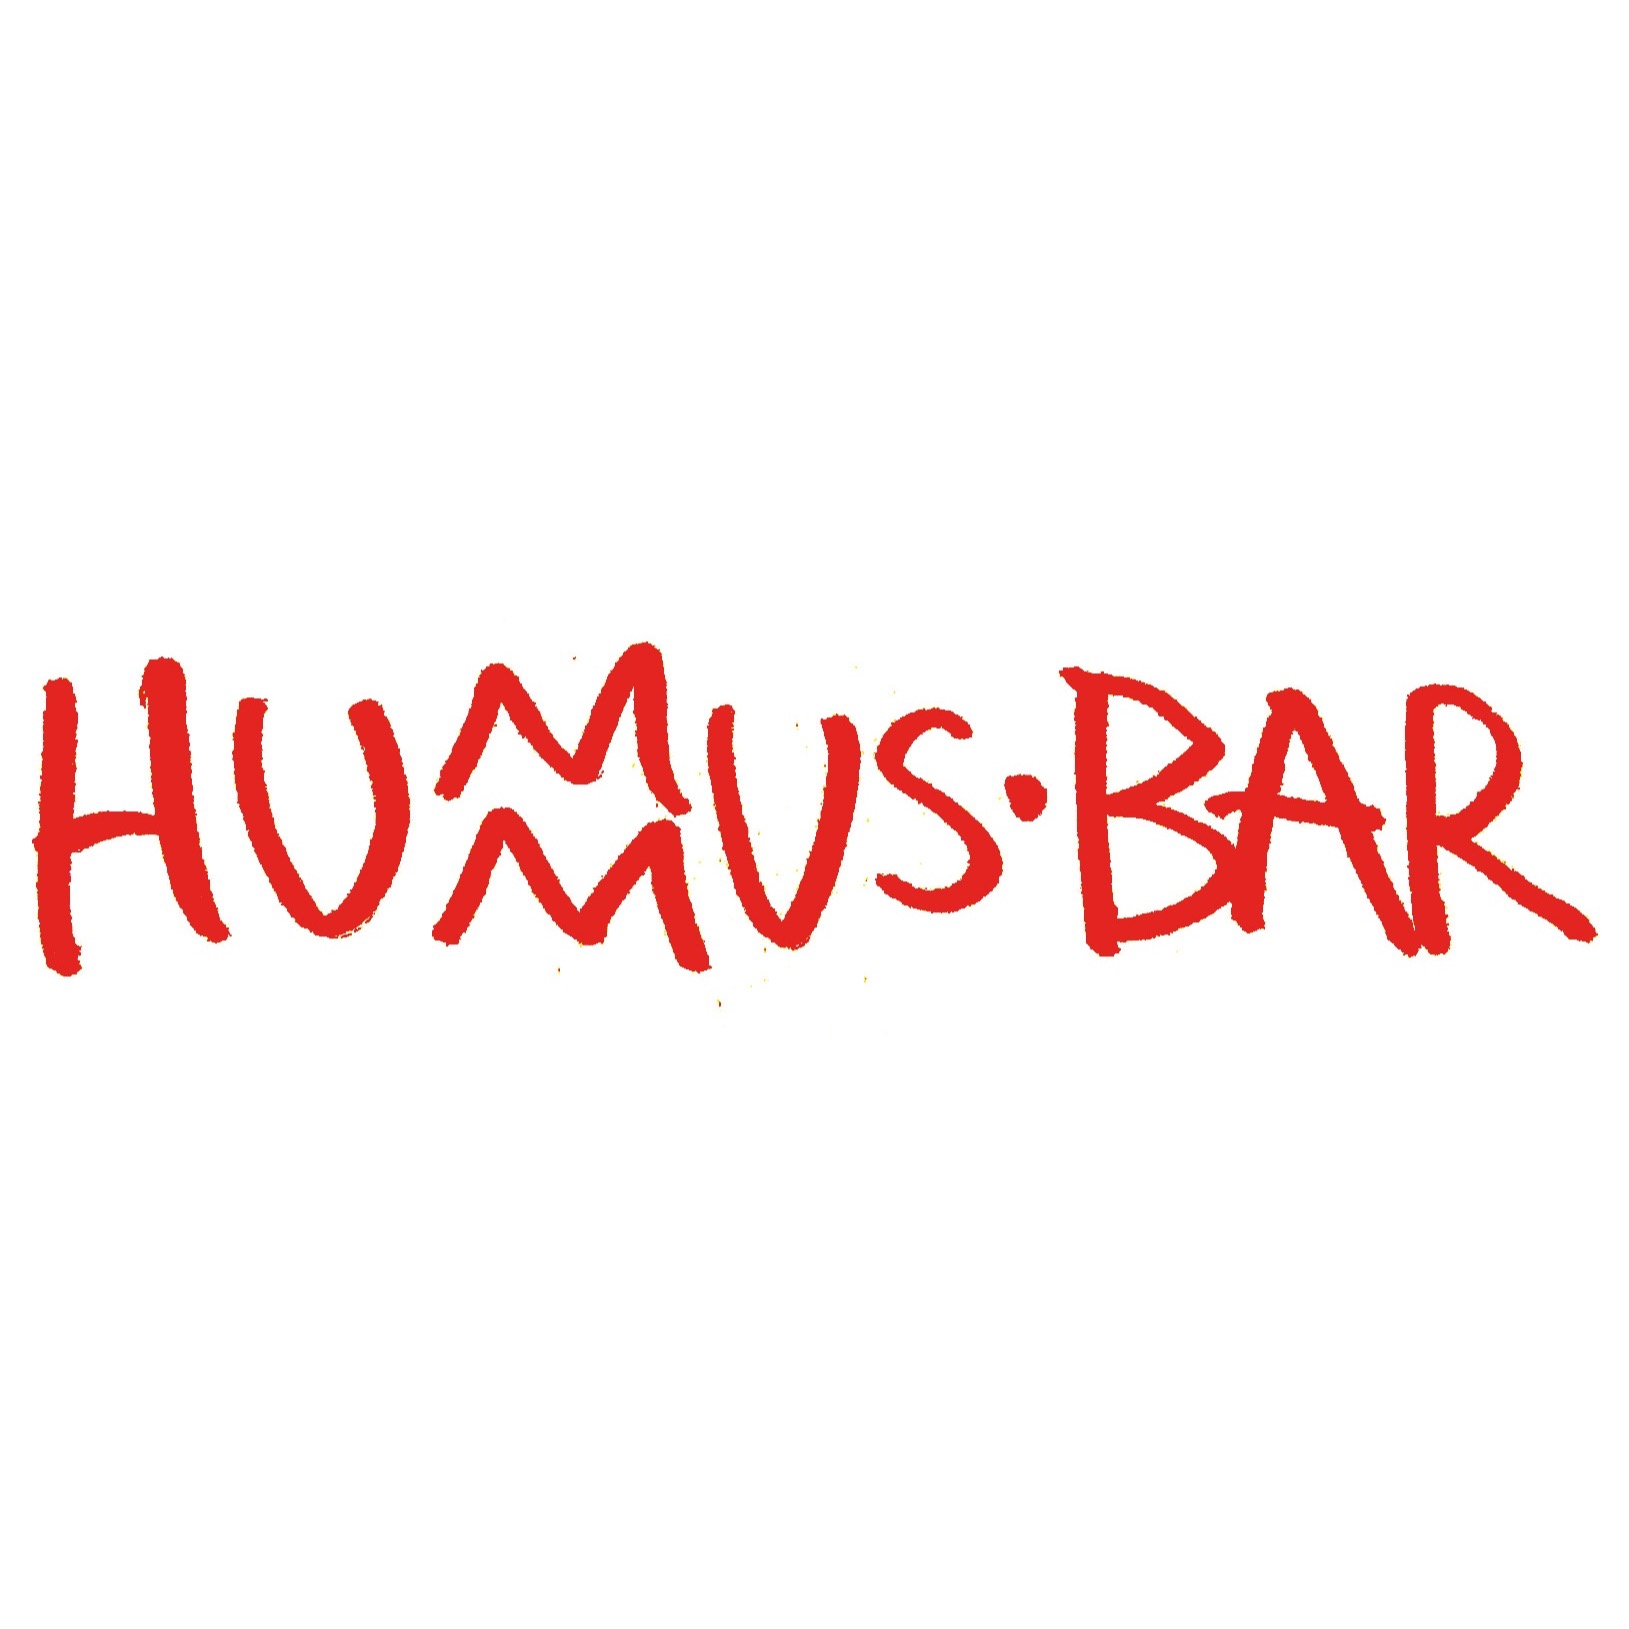 The Hummus Bar Restaurant Bowls Falafel in Hamburg - Logo